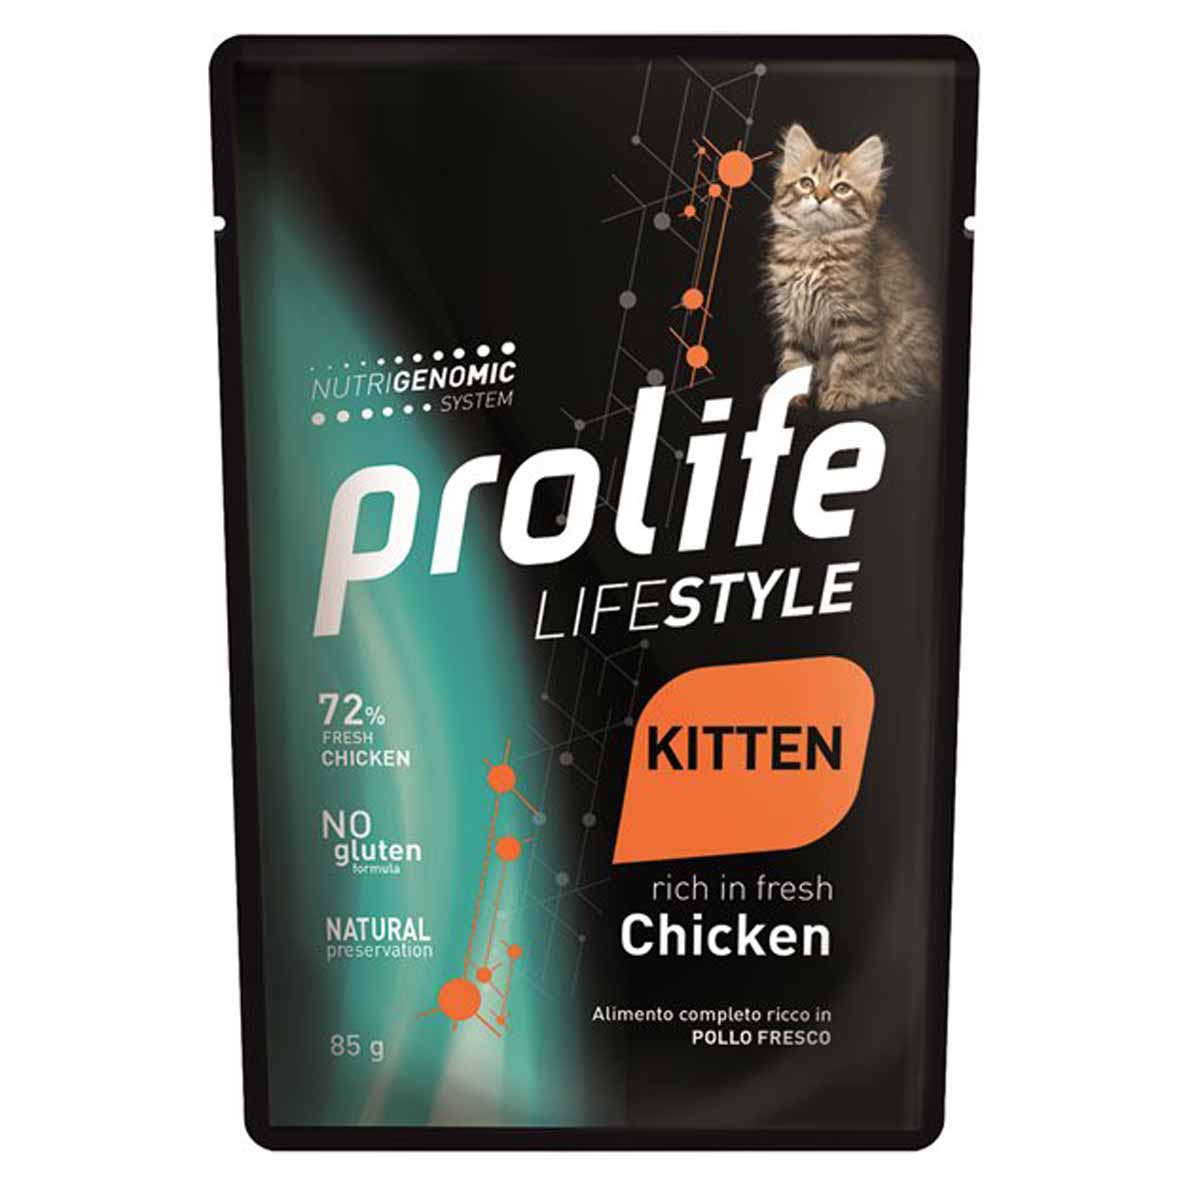 Prolife Lifestyle Cat 85g